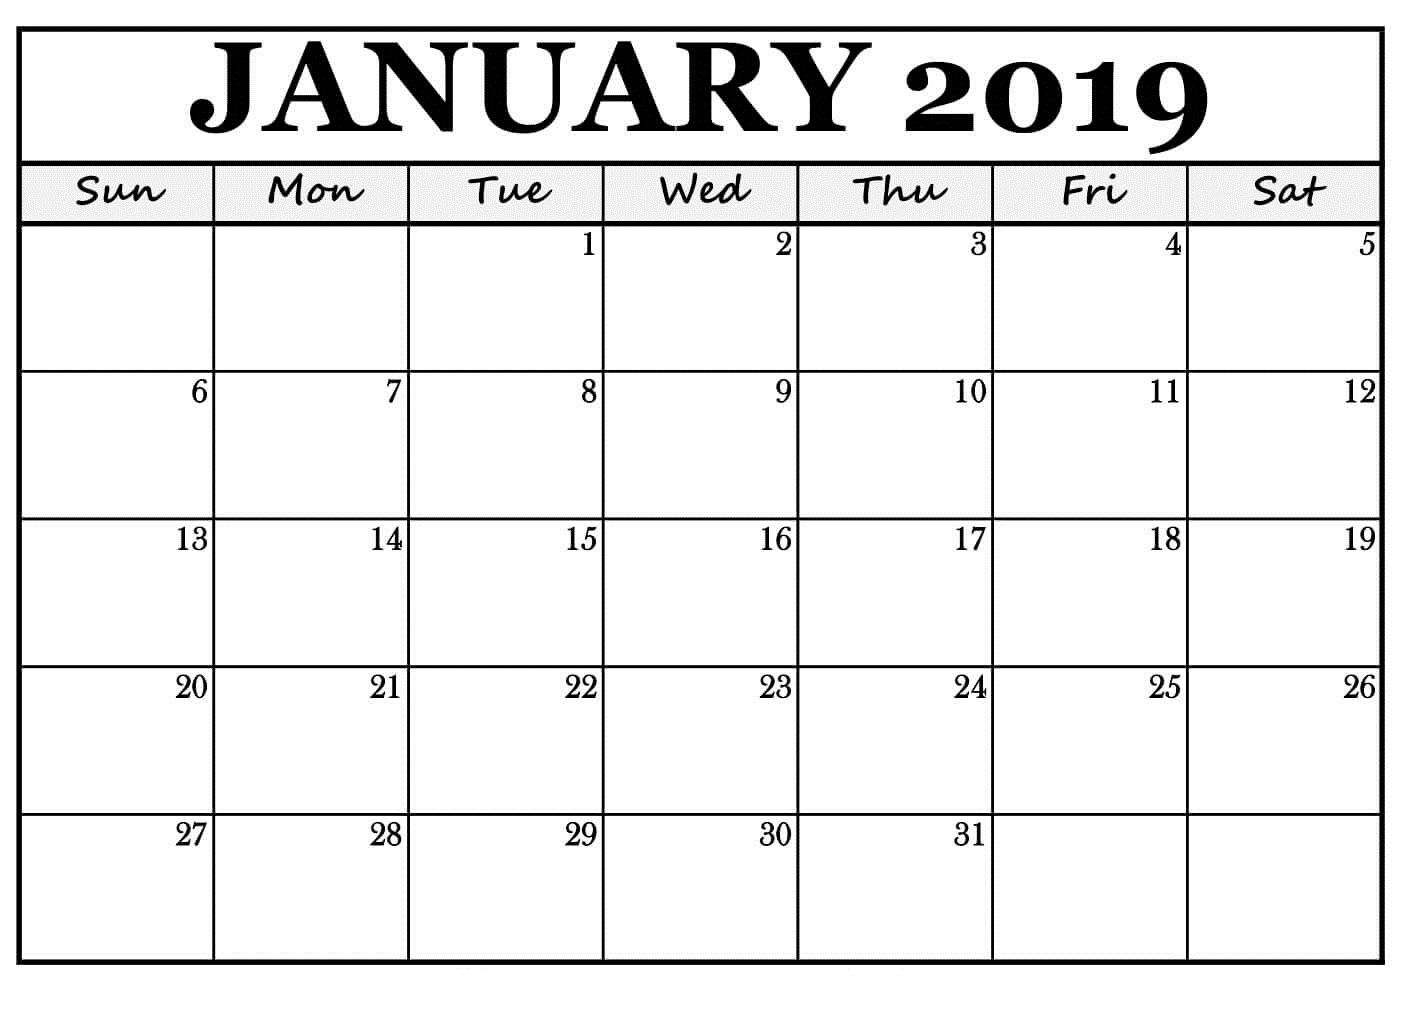 January 2019 Calendar Reminders Free Template | January 2019 with regard to Free Printable 2020 Waterproof Calendars